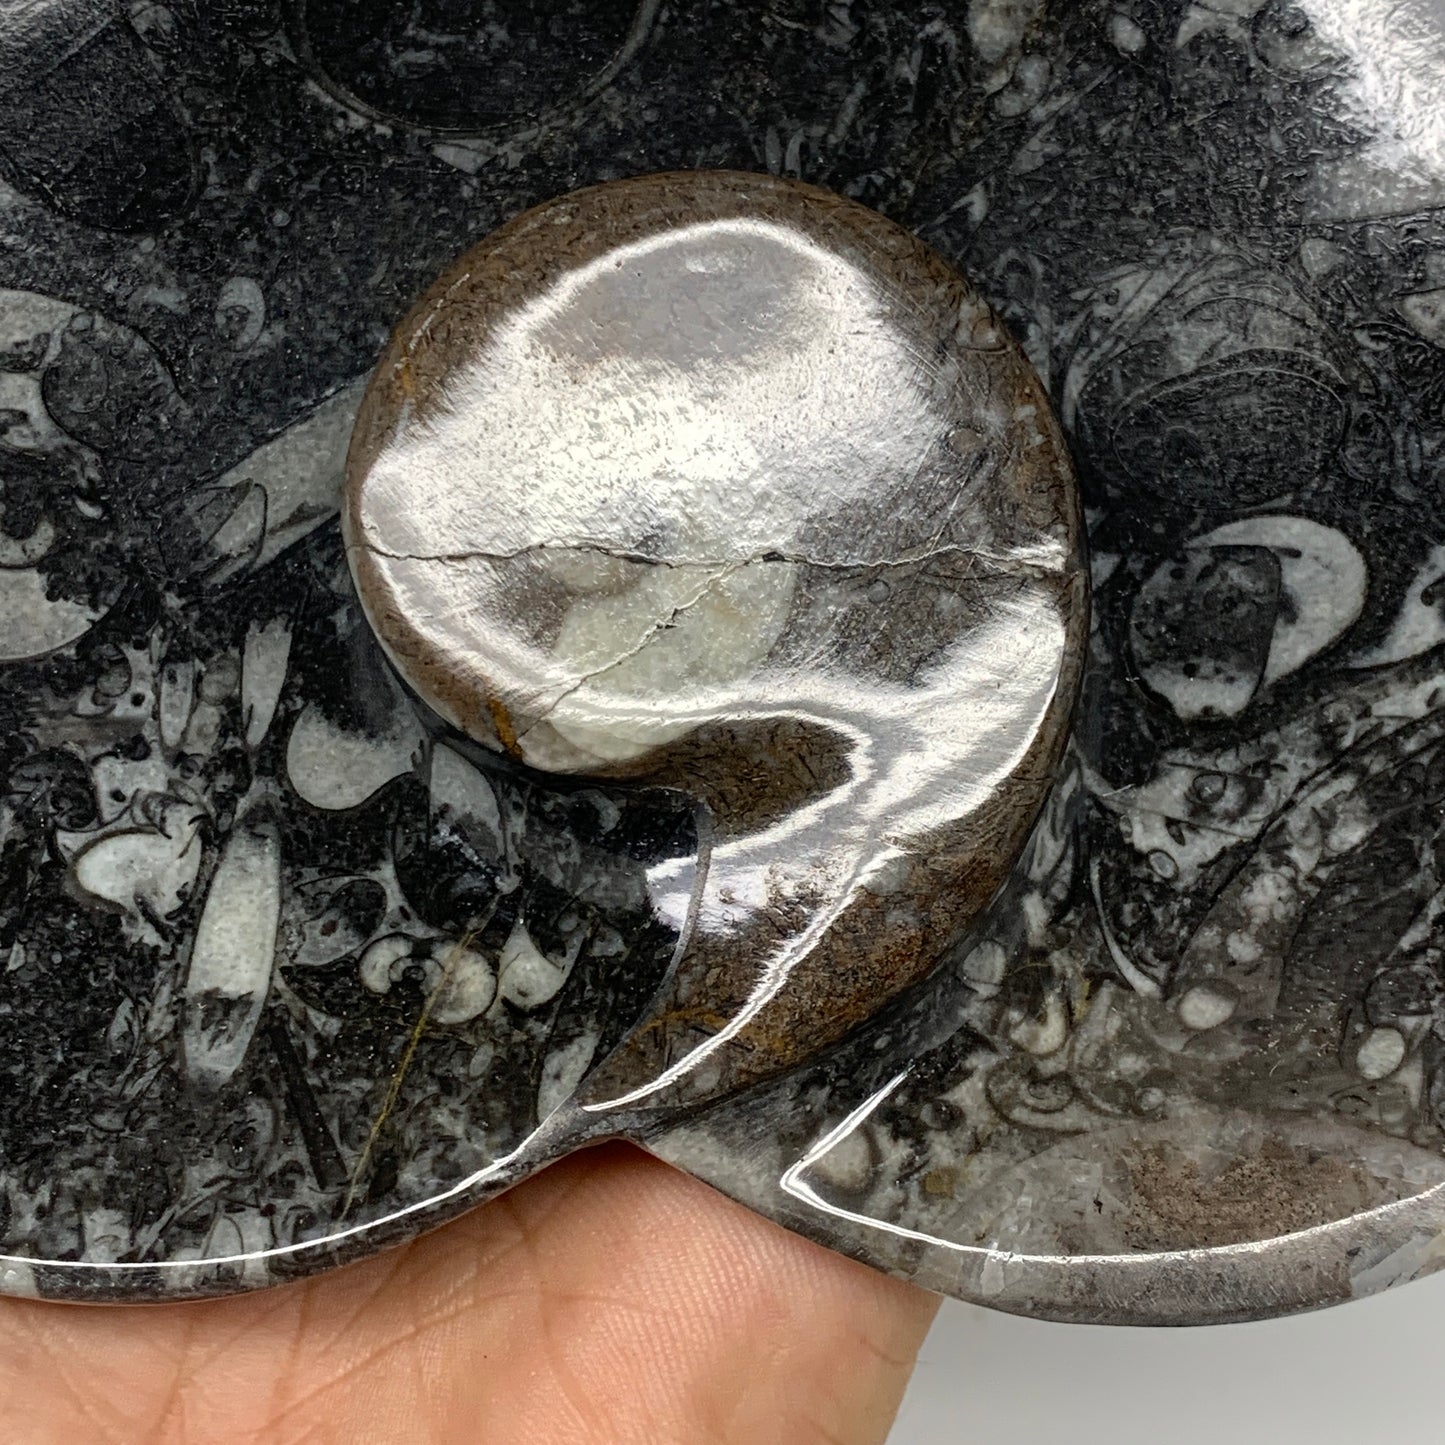 2Pcs, 6.25"x6.25" Heart Fossils Orthoceras Ammonite Bowls @Morocco, B8799